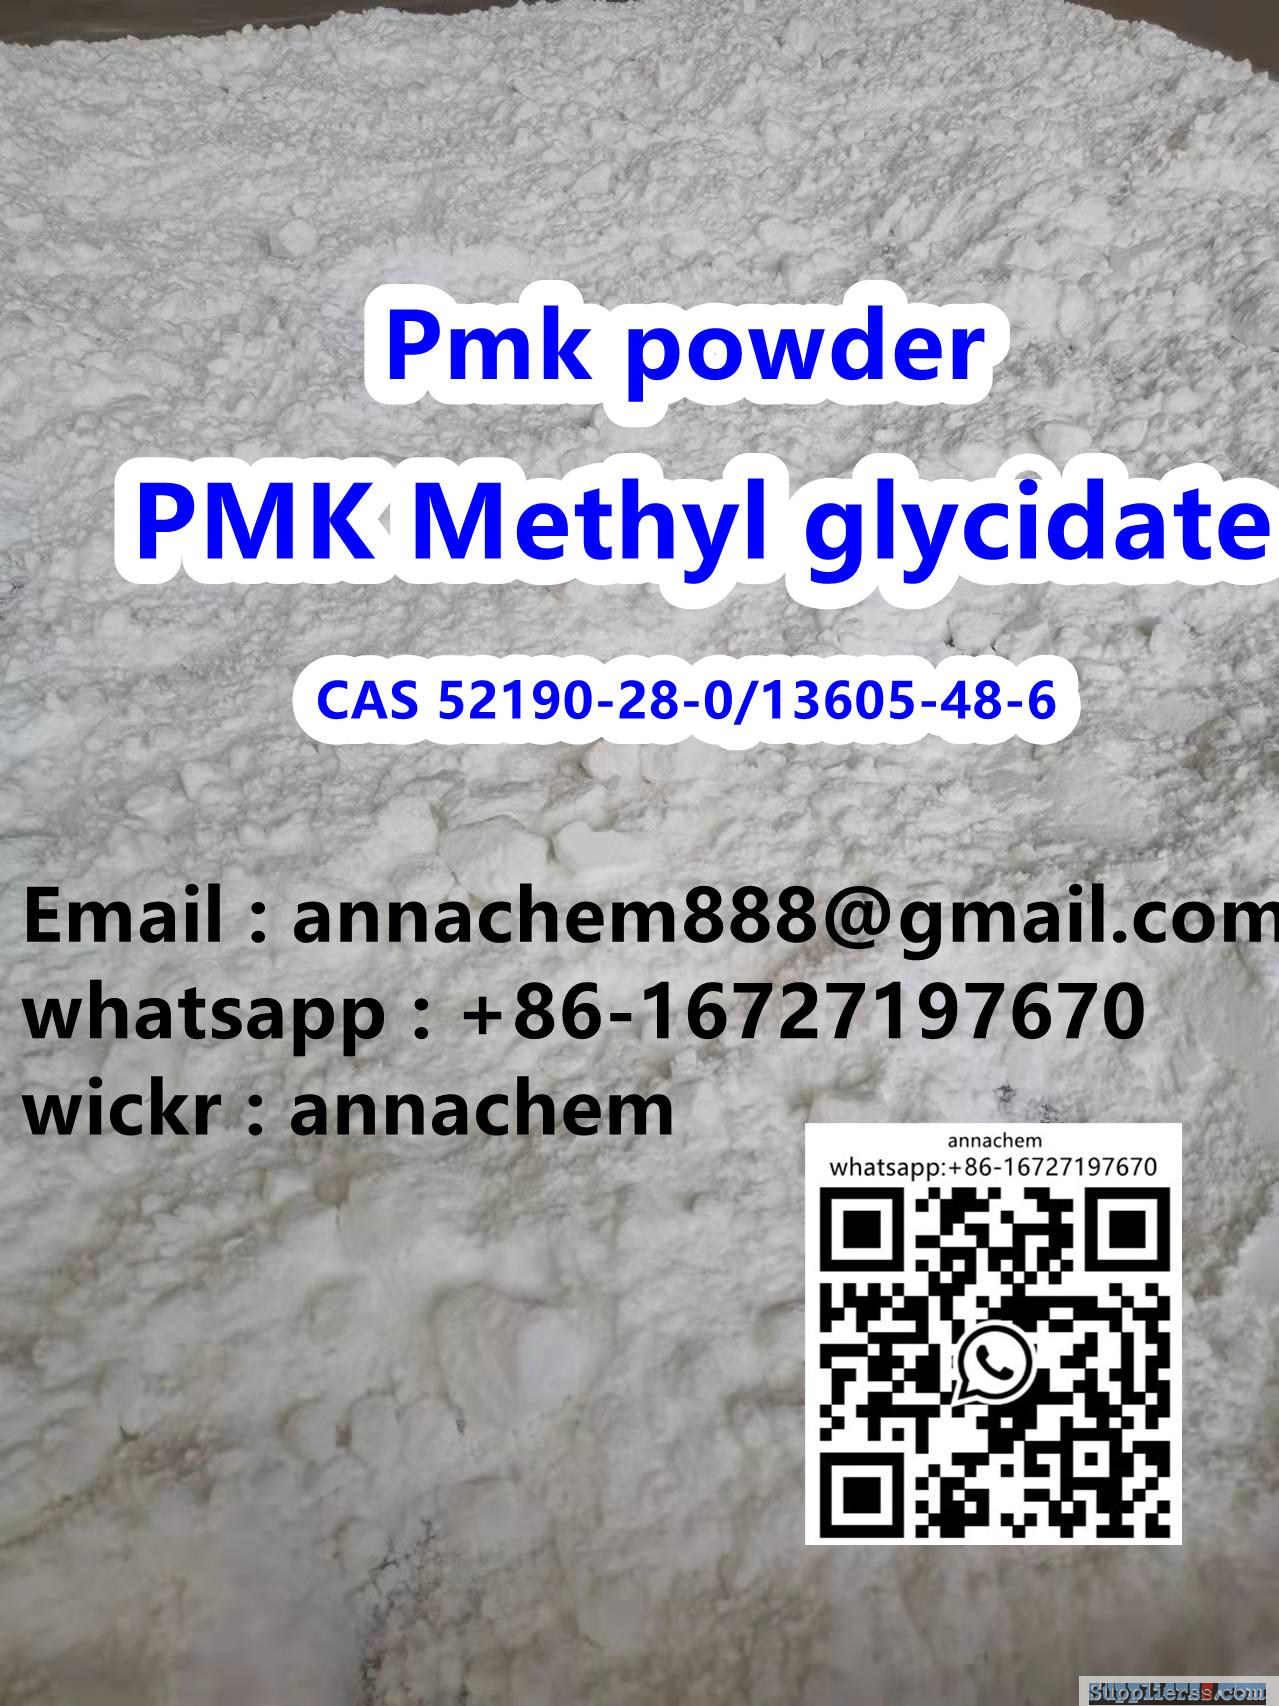 PMK oil pmk powder Pmk Ethyl Glycidate CAS 52190-28-0/13605-48-6/CAS 28578-16-7 (wickr:ann